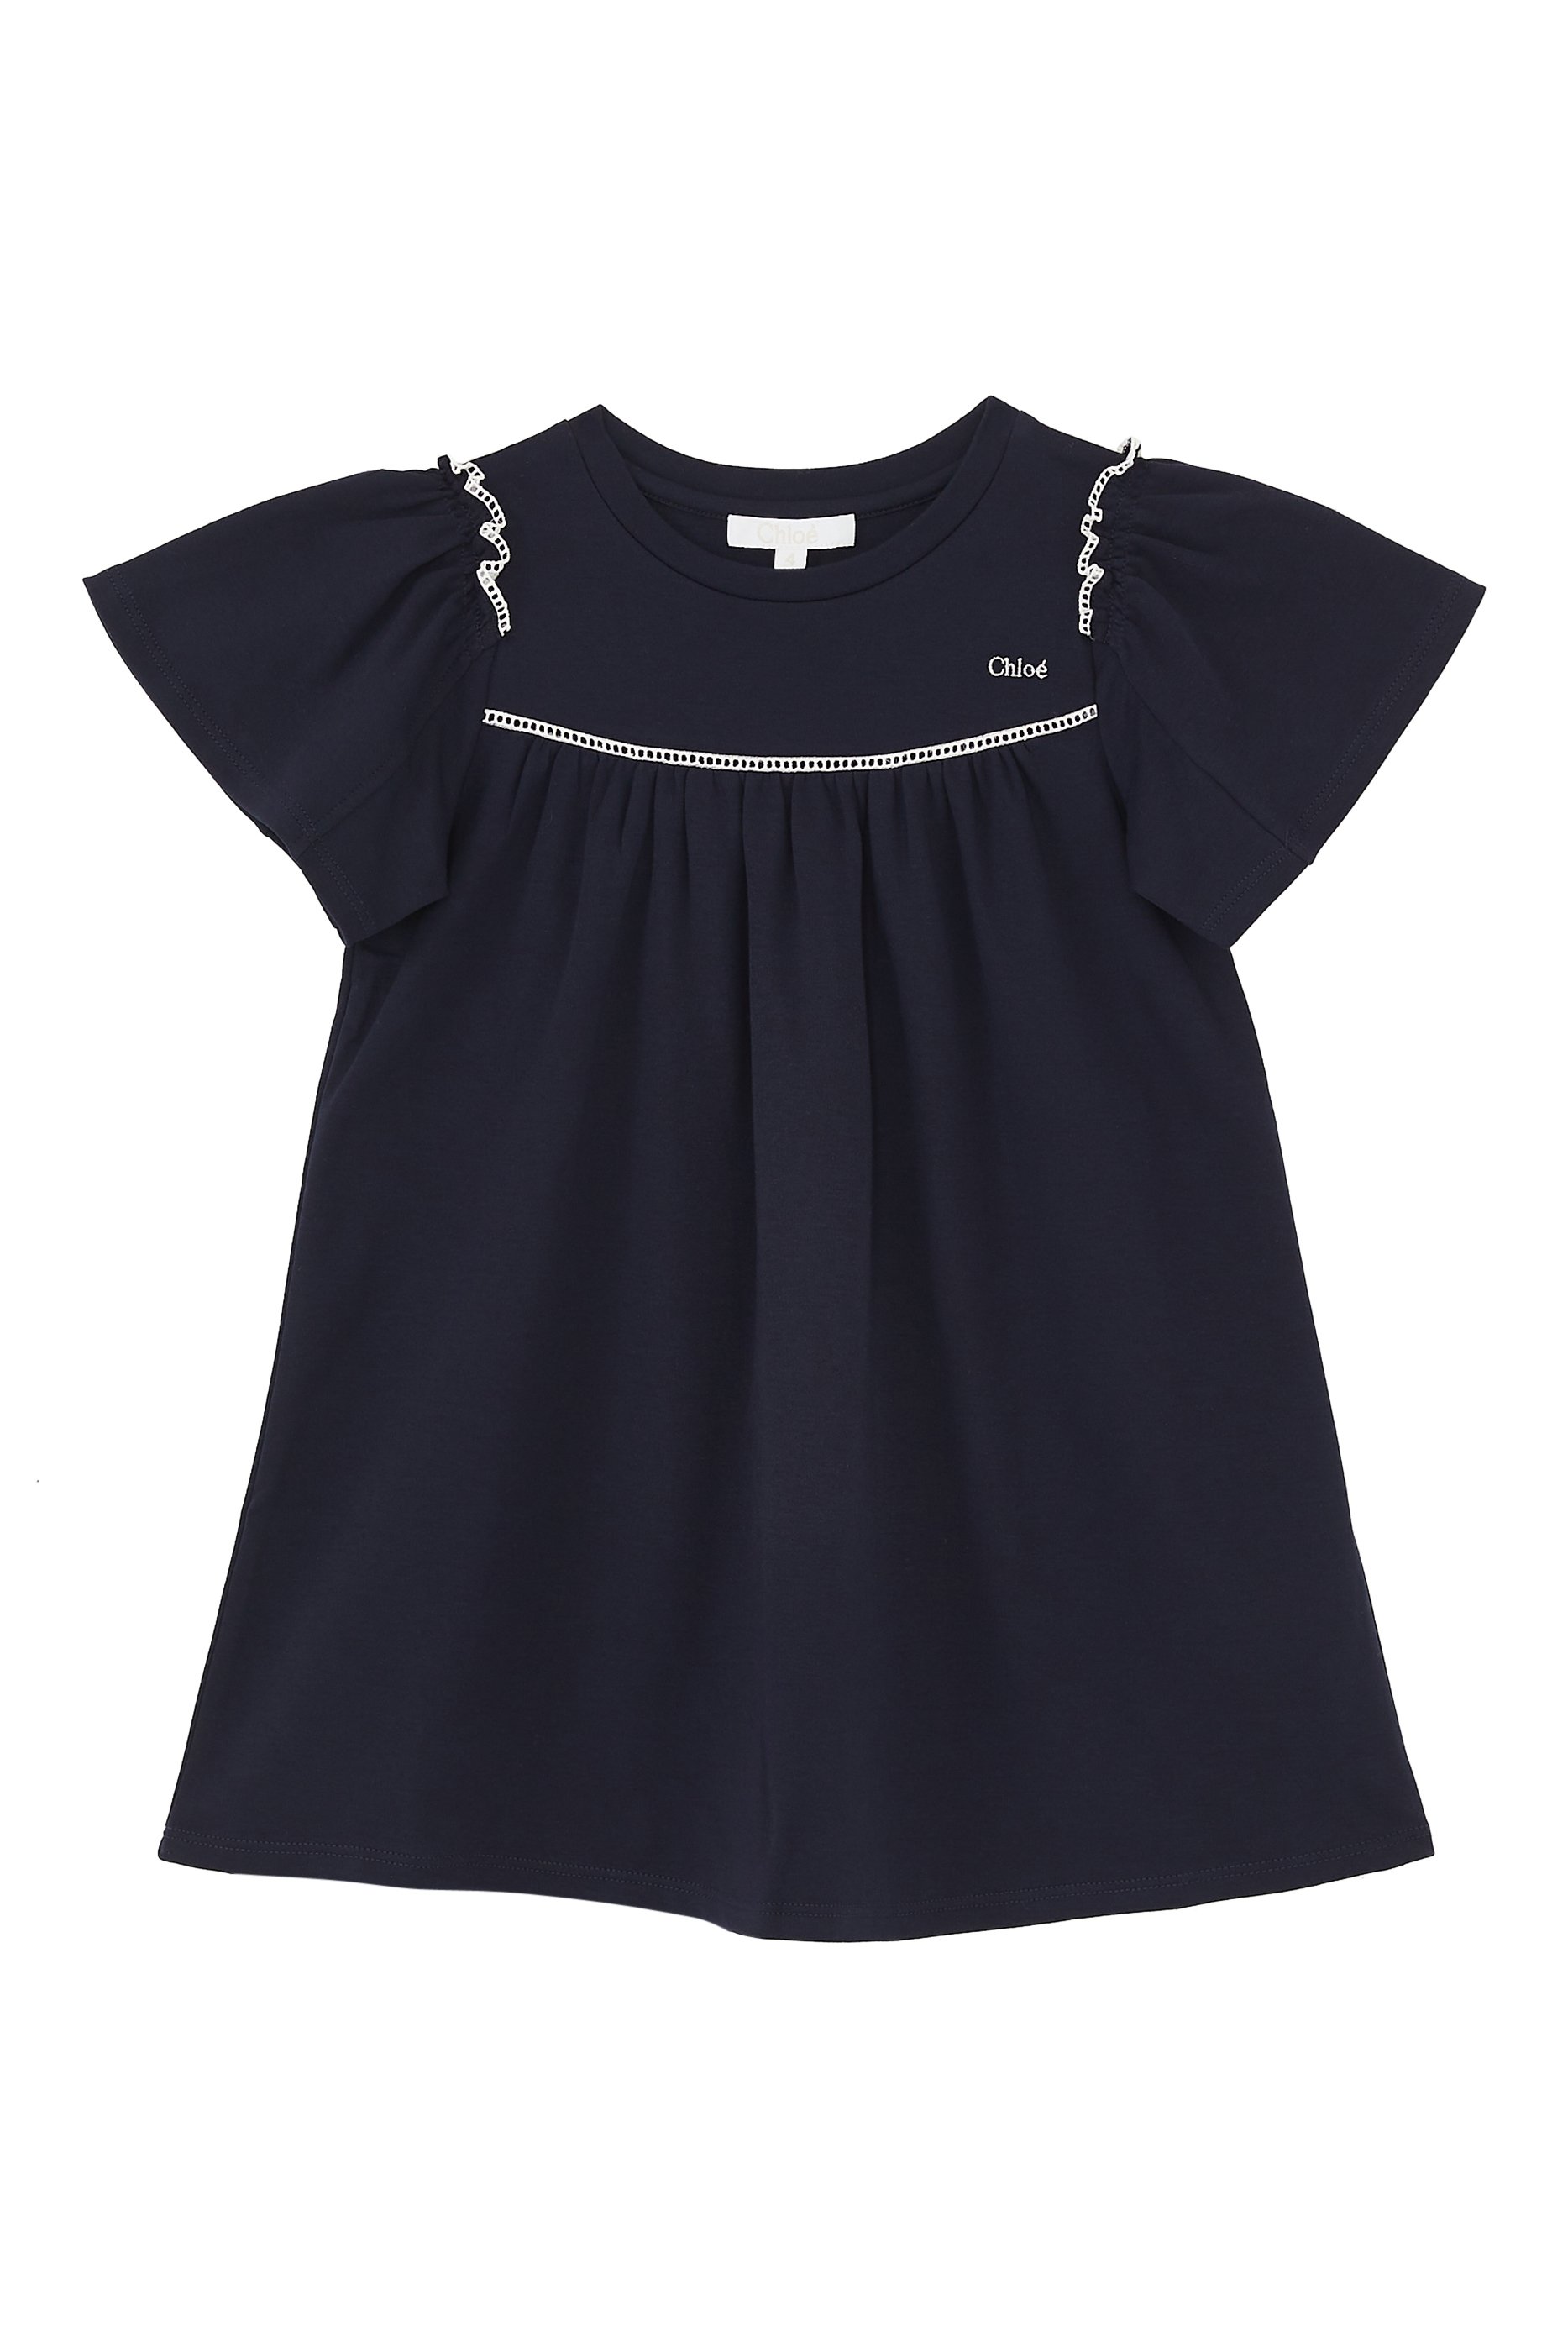 Buy Chloé Kids Short-Sleeve Dress for Girl | Bloomingdale's Kuwait